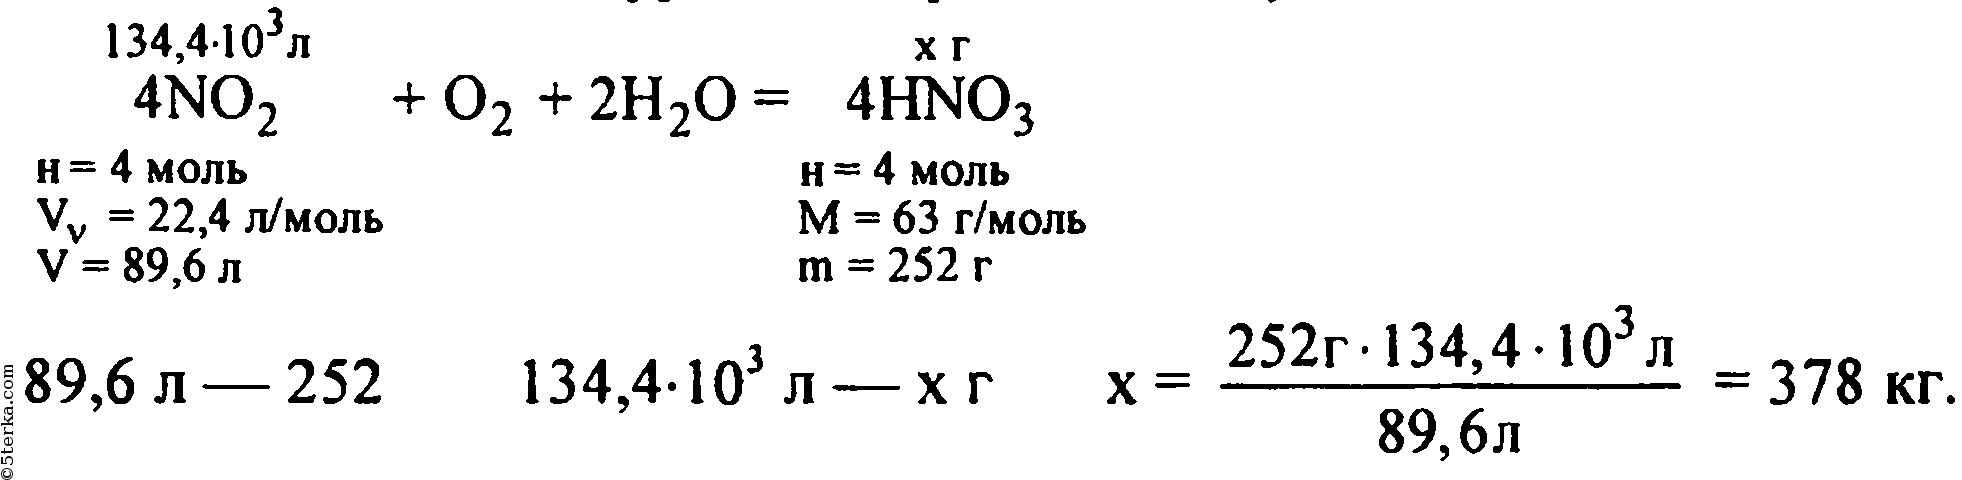 Хлорид аммония аммиак азот оксид азота